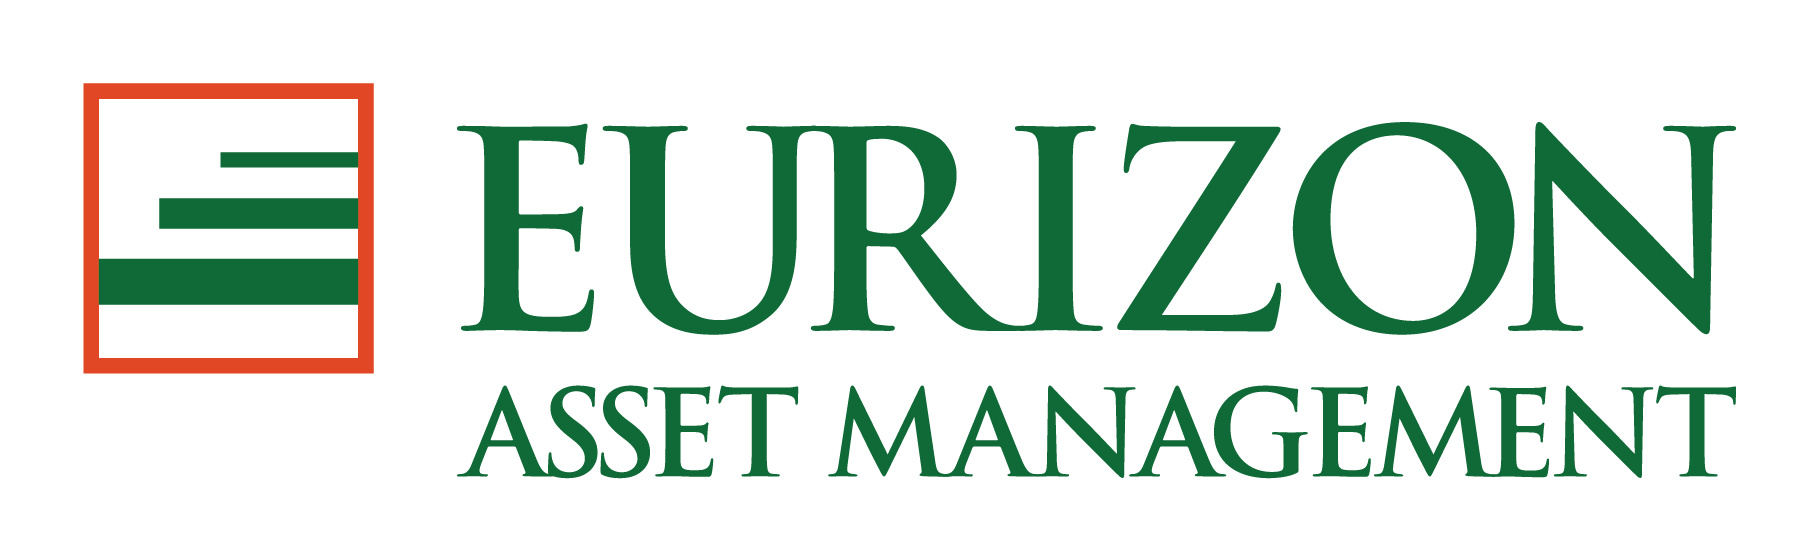 Eurizon Asset Management SGR